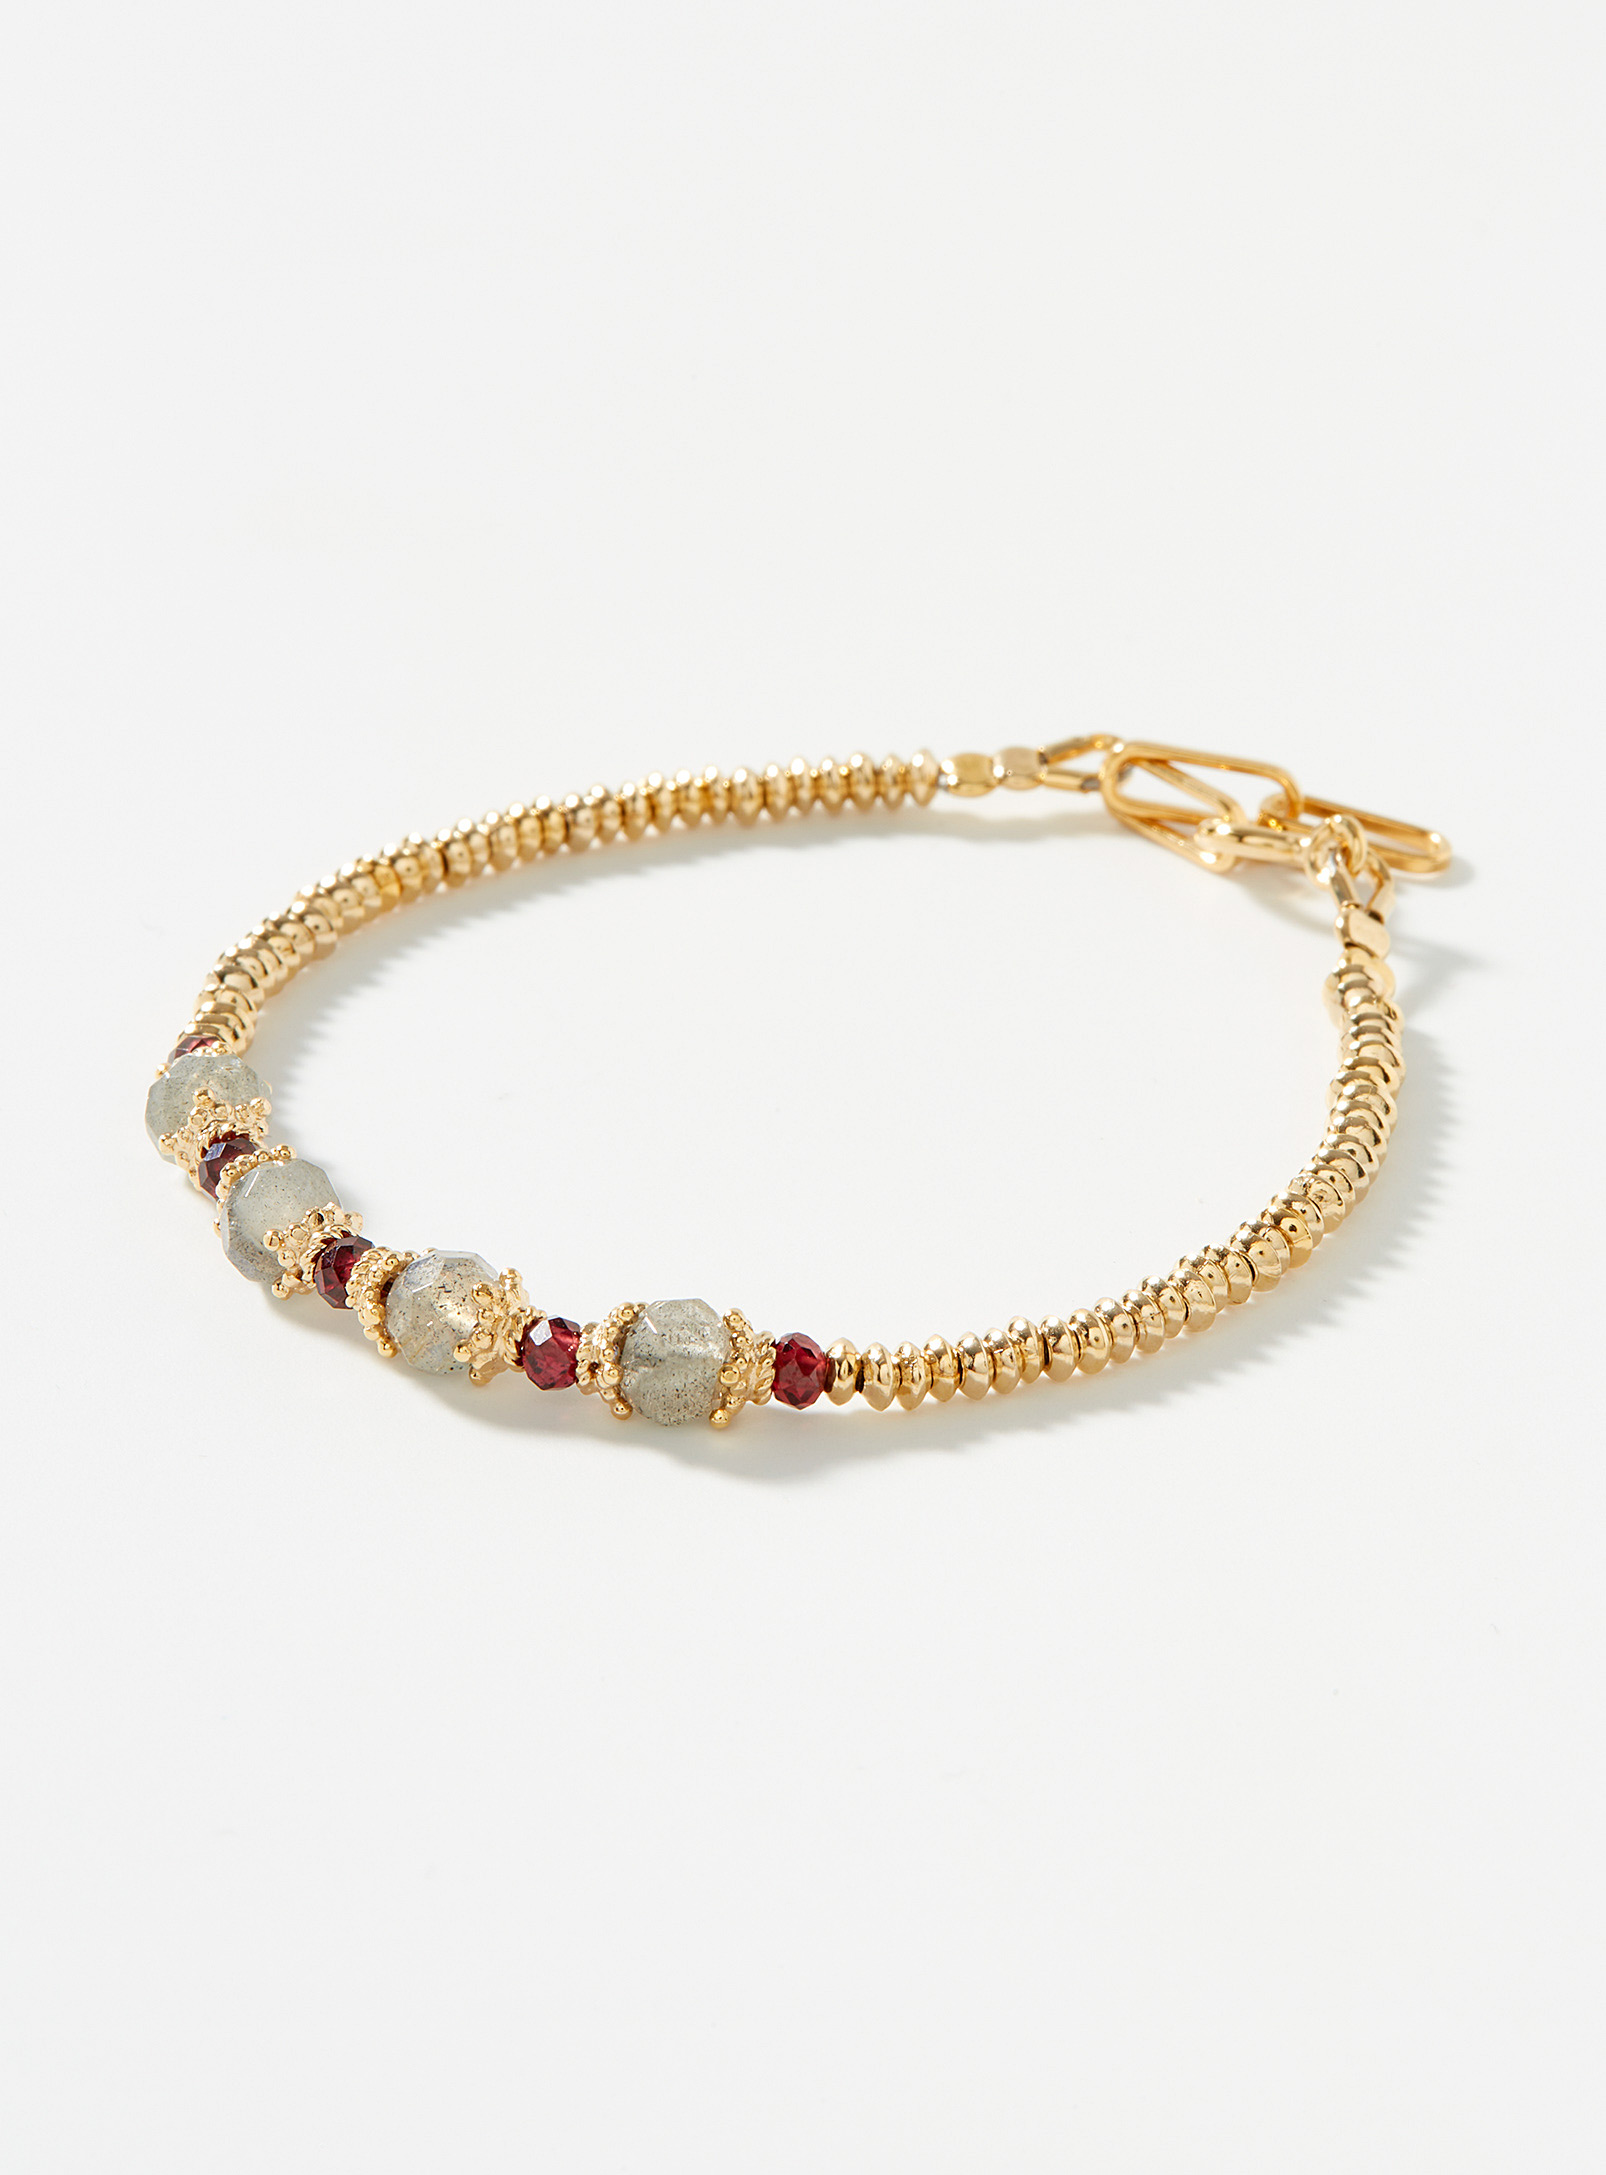 Tityaravy Sriphala Beads Bracelet In Assorted